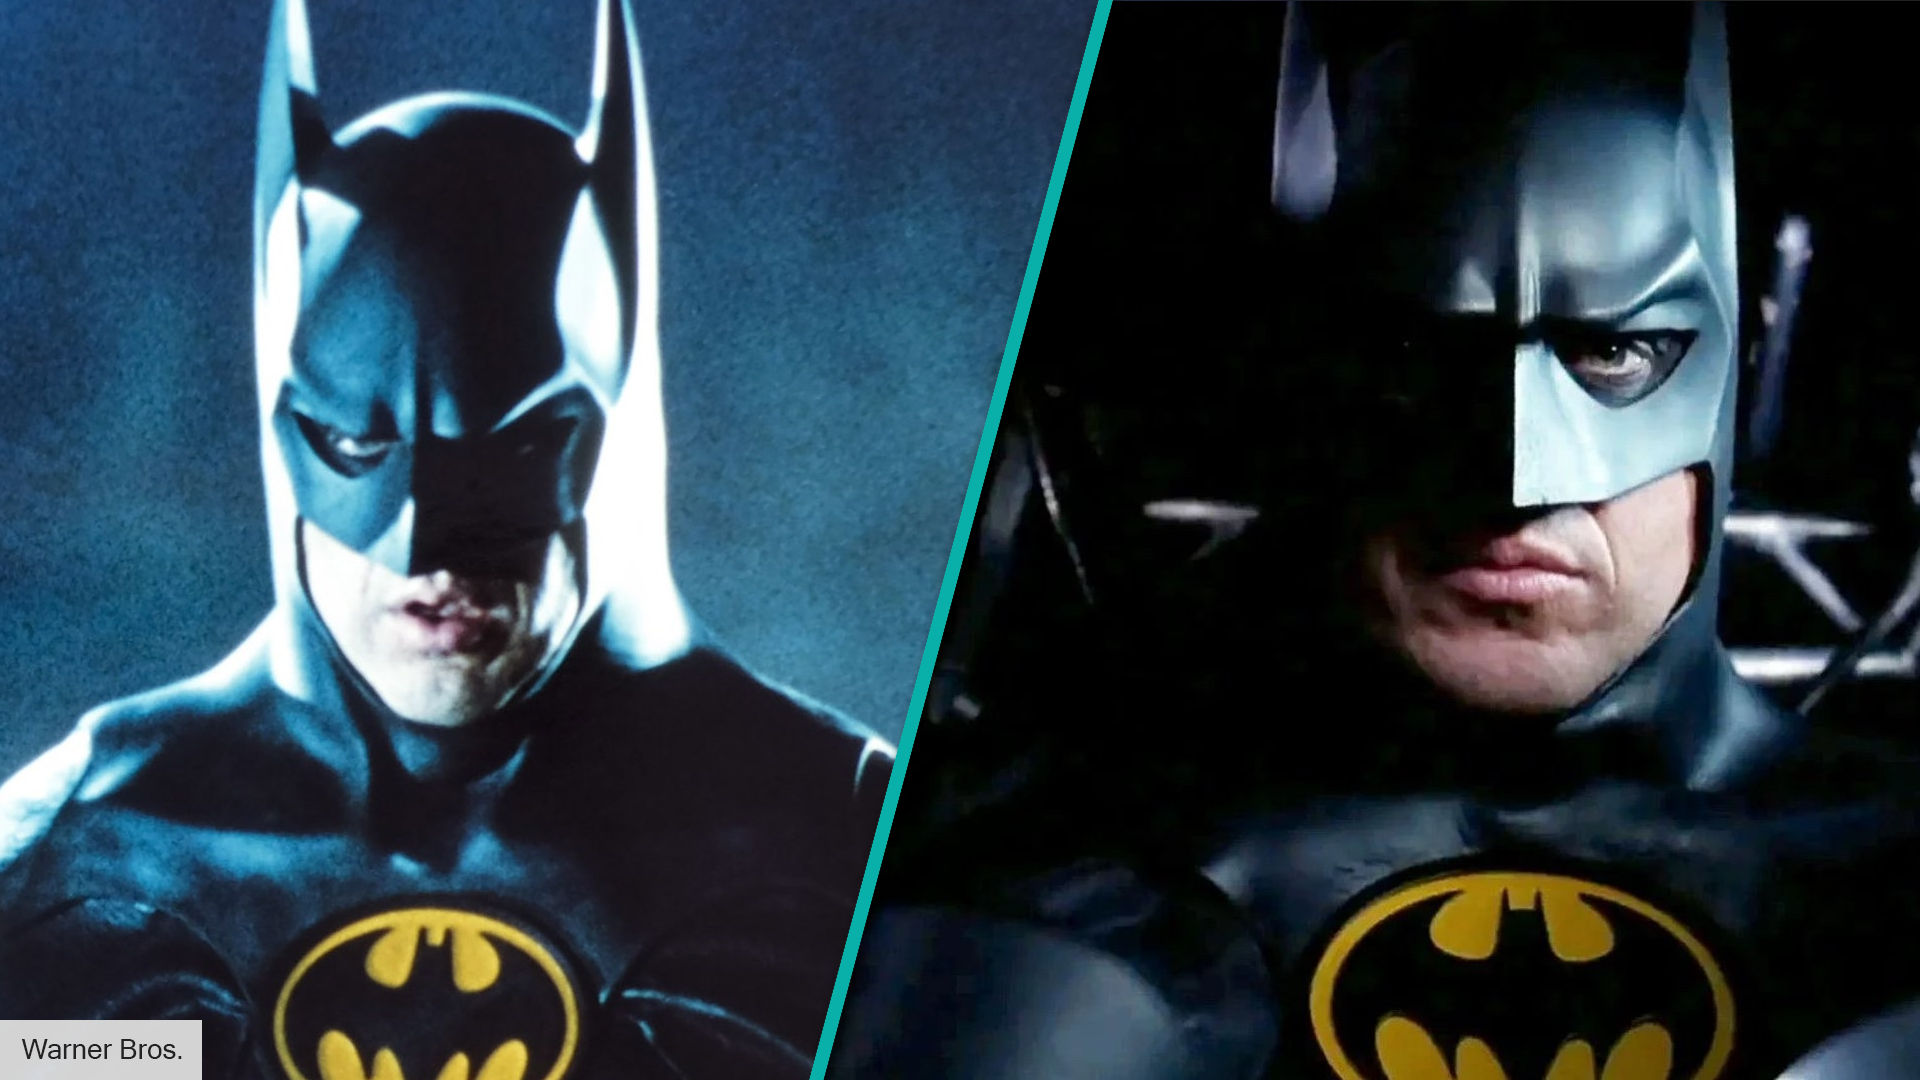 Micheal Keaton teases Batman return with new suit photo | The Digital Fix